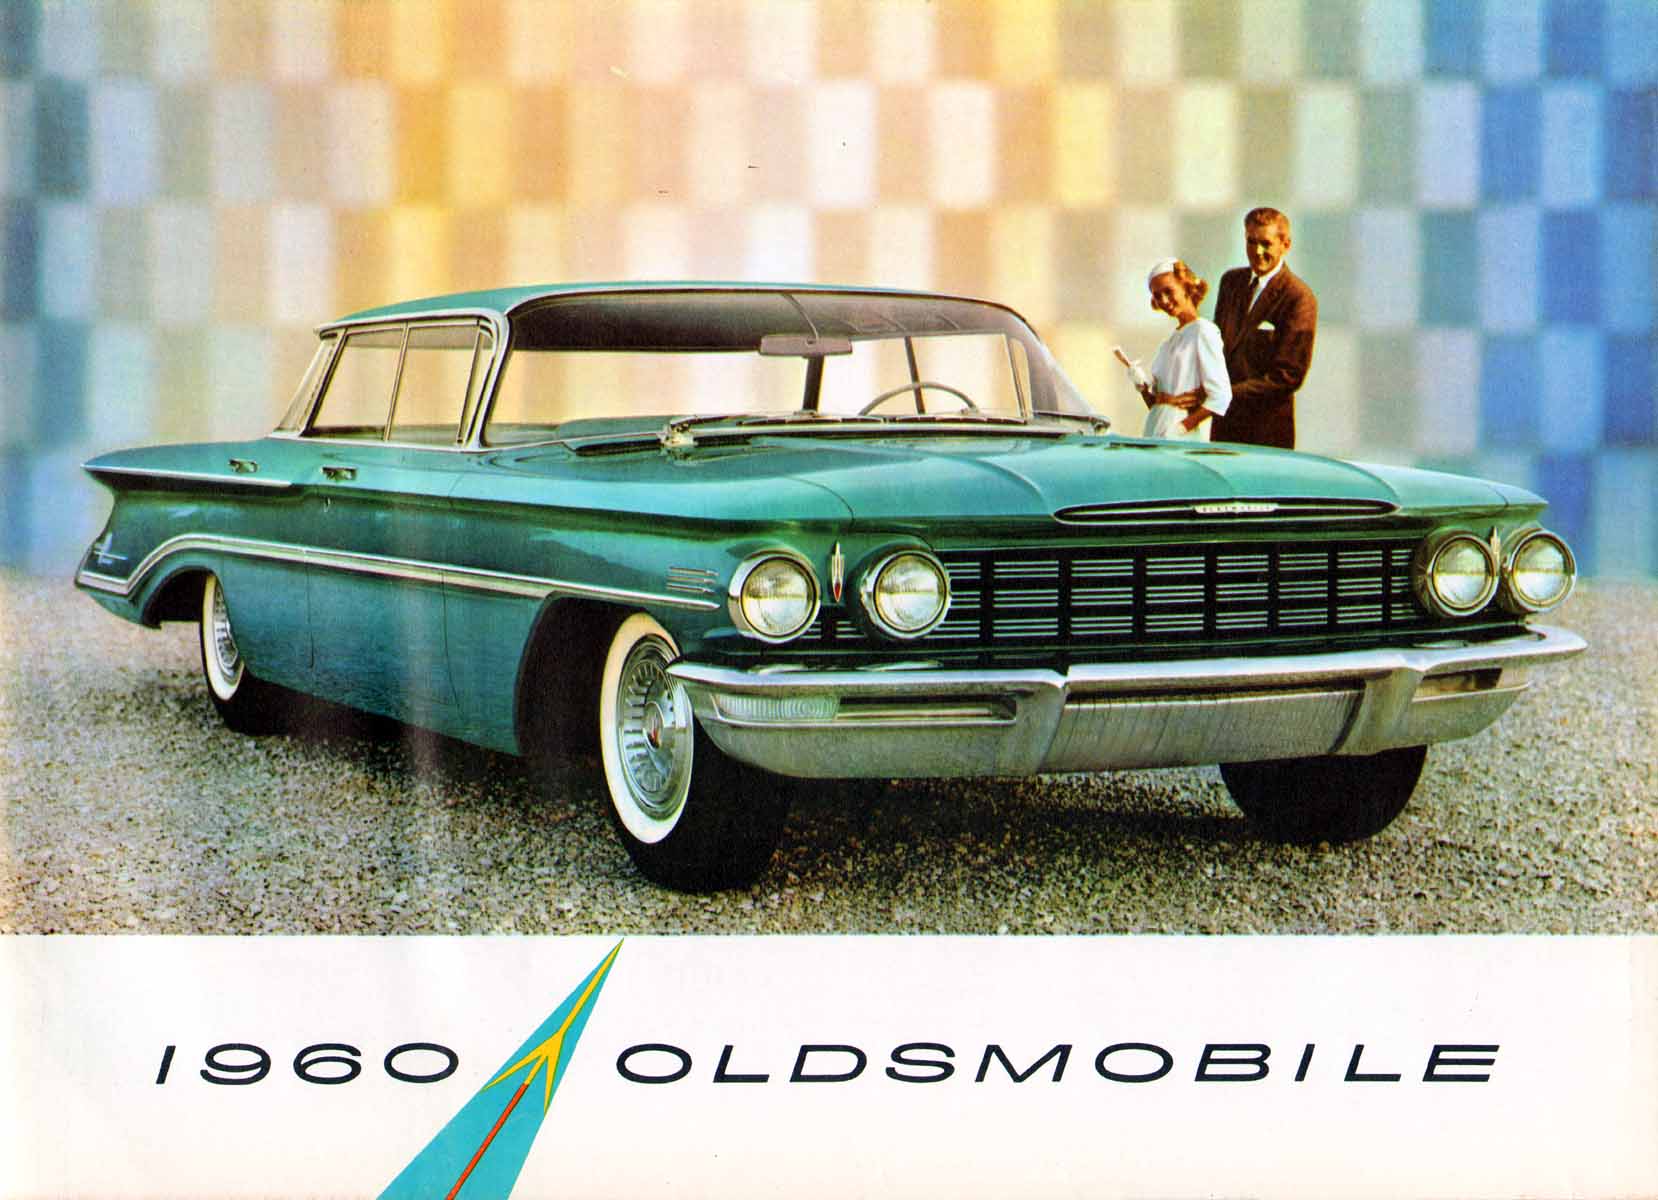 1960 Oldsmobile Brochure